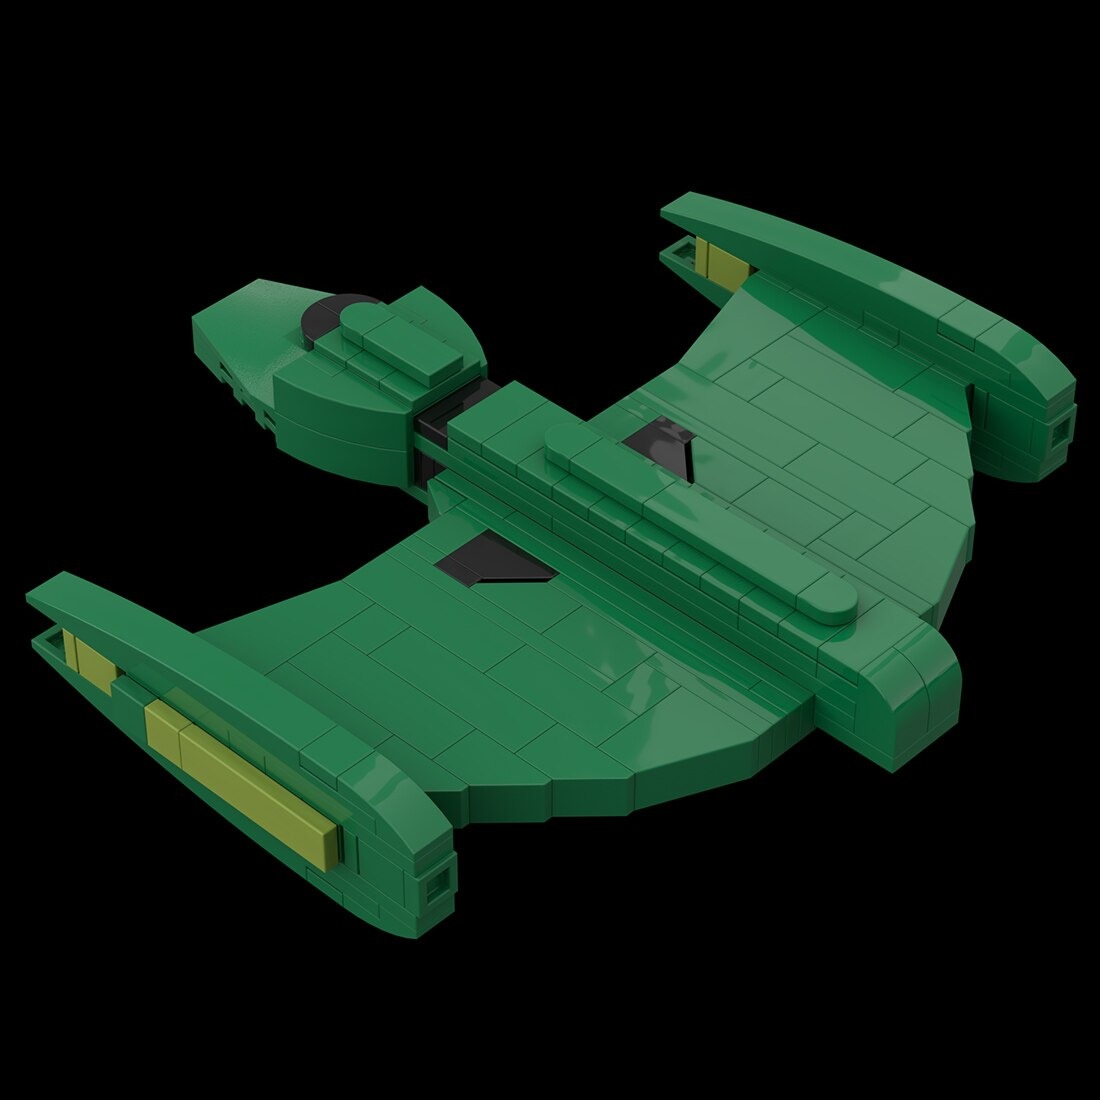 Space MOC-116988 Romulan Scout Ship MOCBRICKLAND